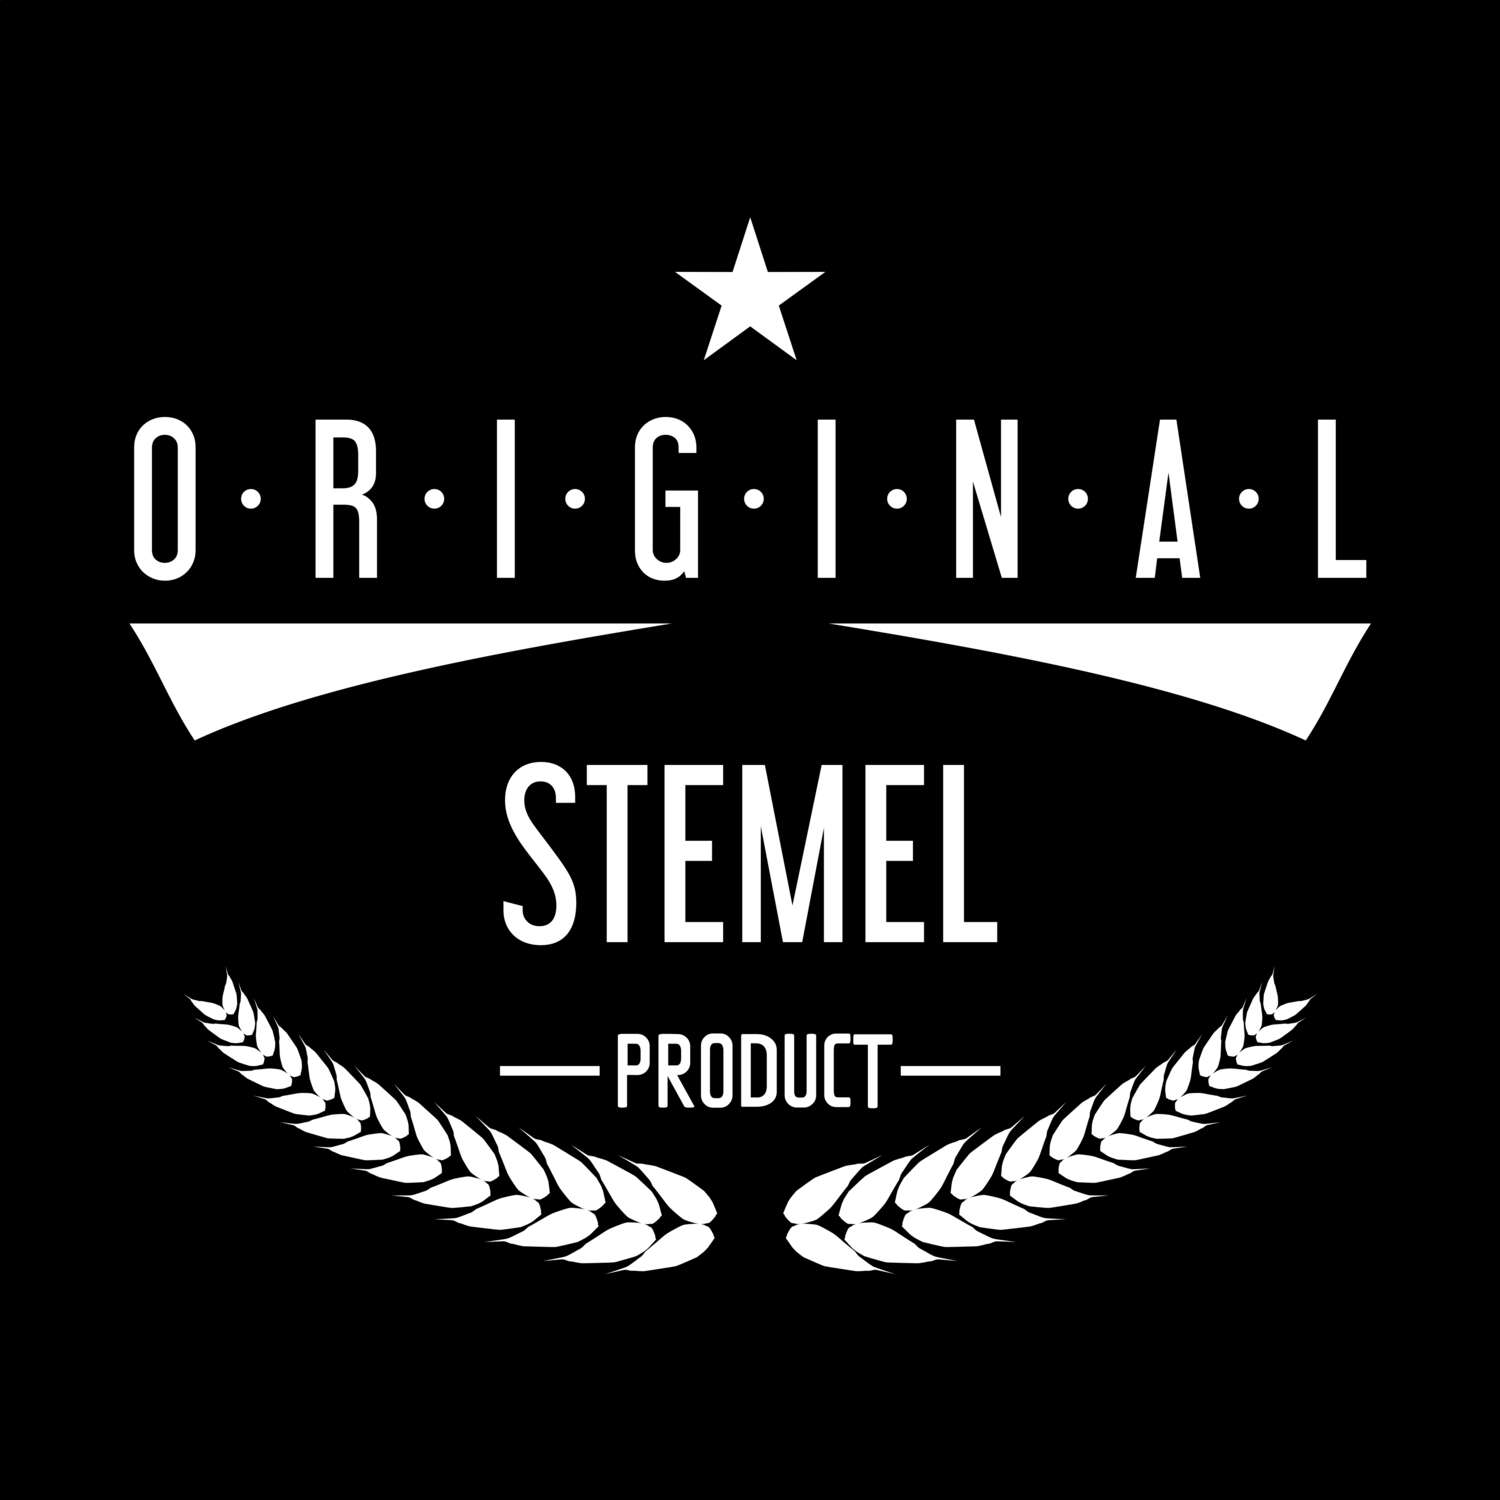 Stemel T-Shirt »Original Product«